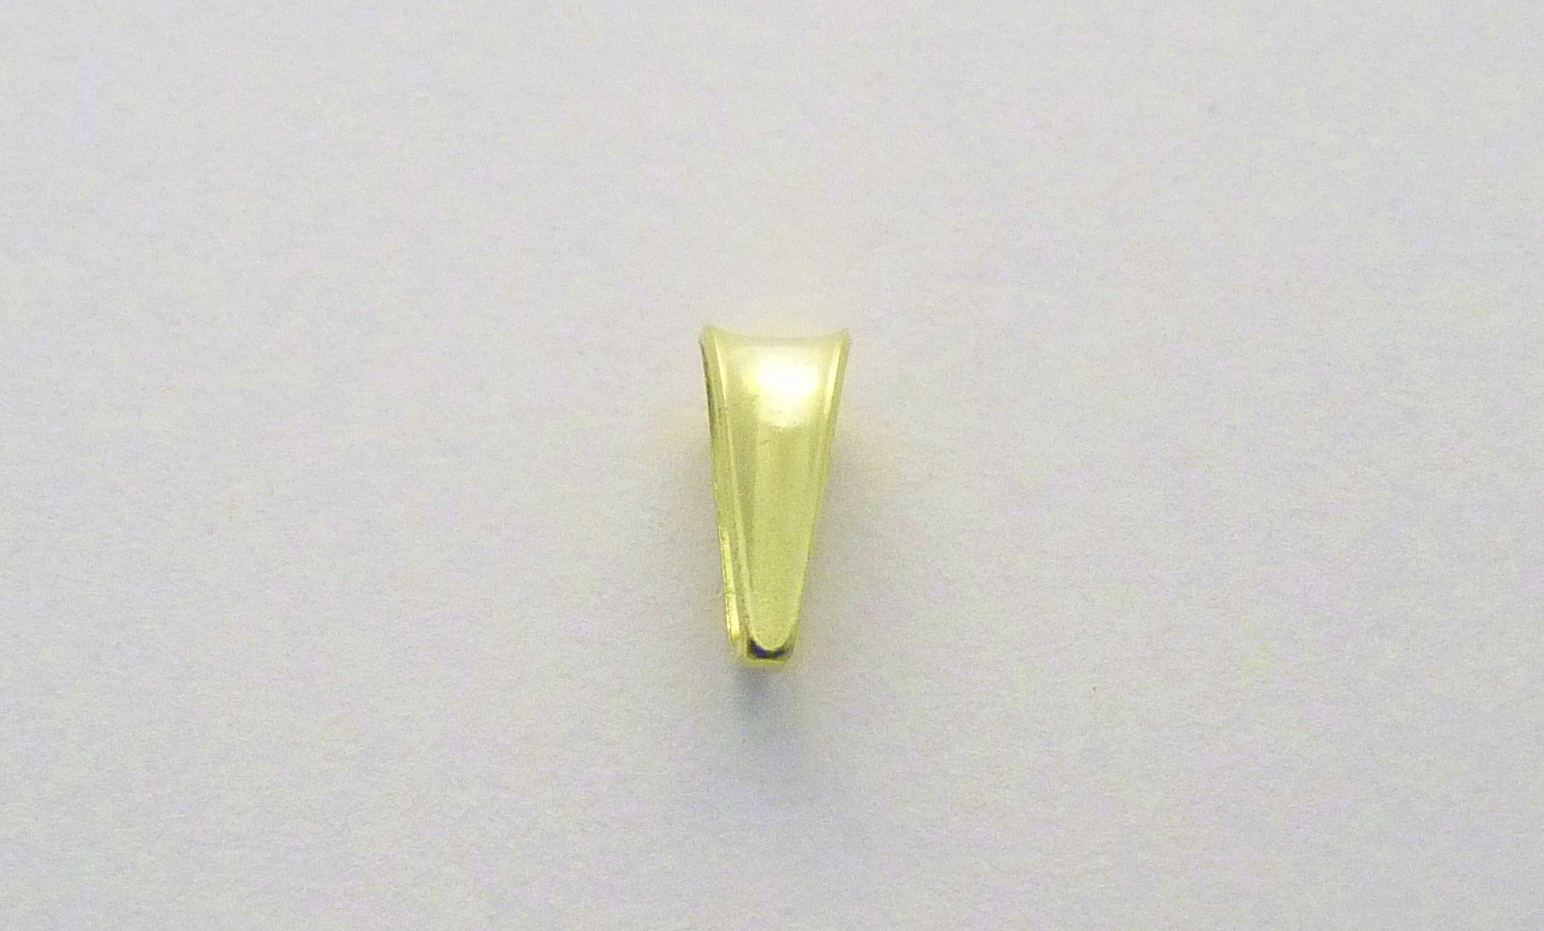 Kontraouško triangl malý plastický 0,22g/ks(7x3,2mm)130-01-002